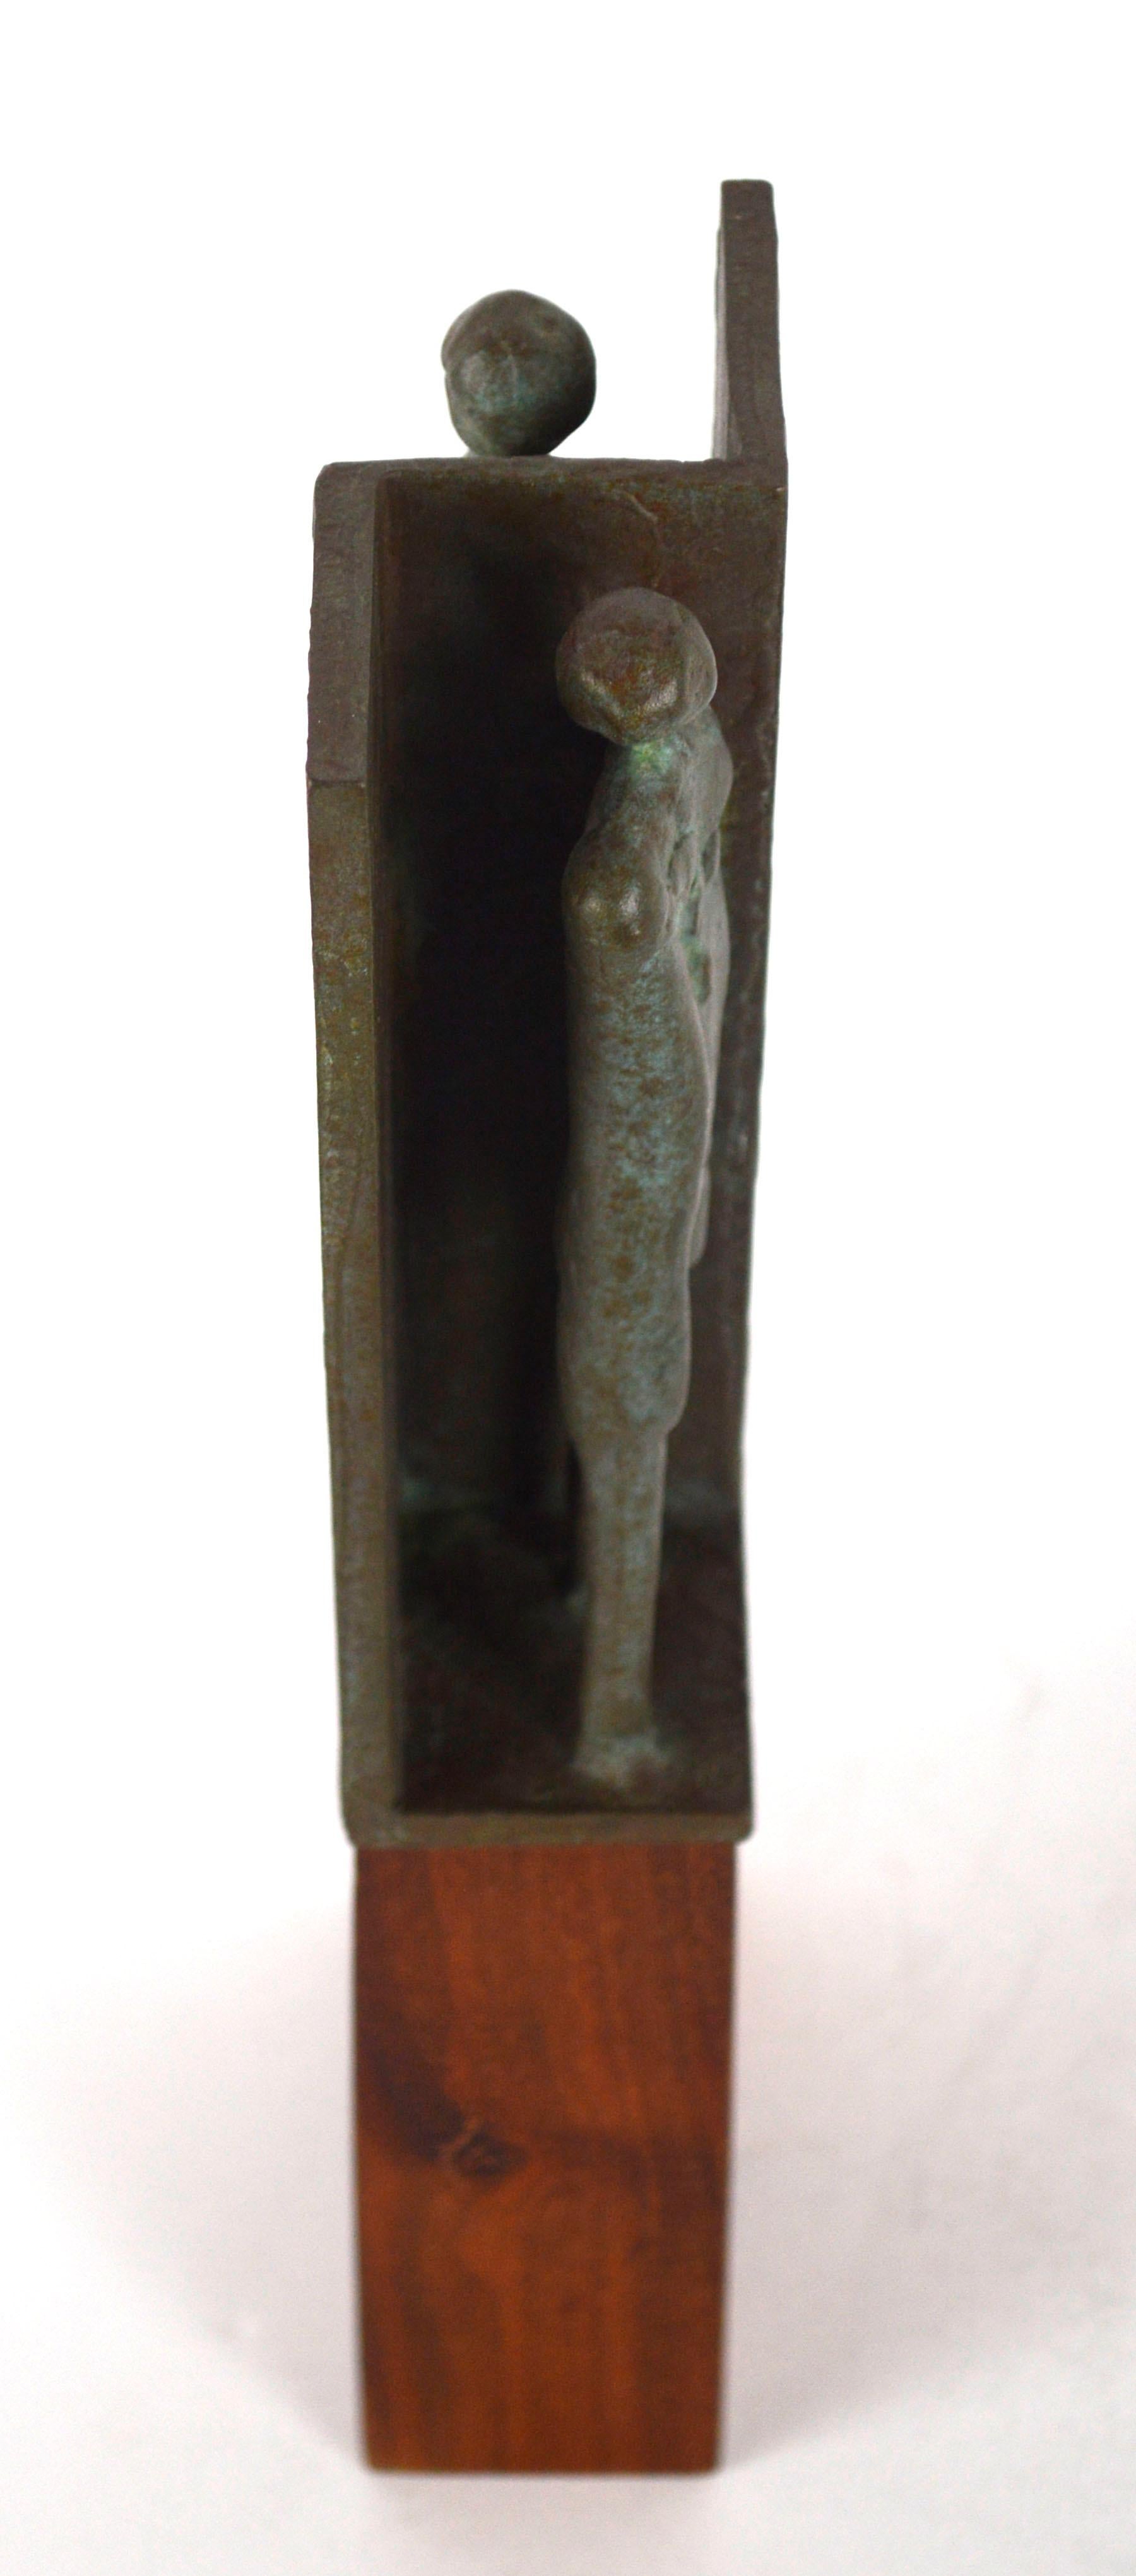 figurative bronze sculpture